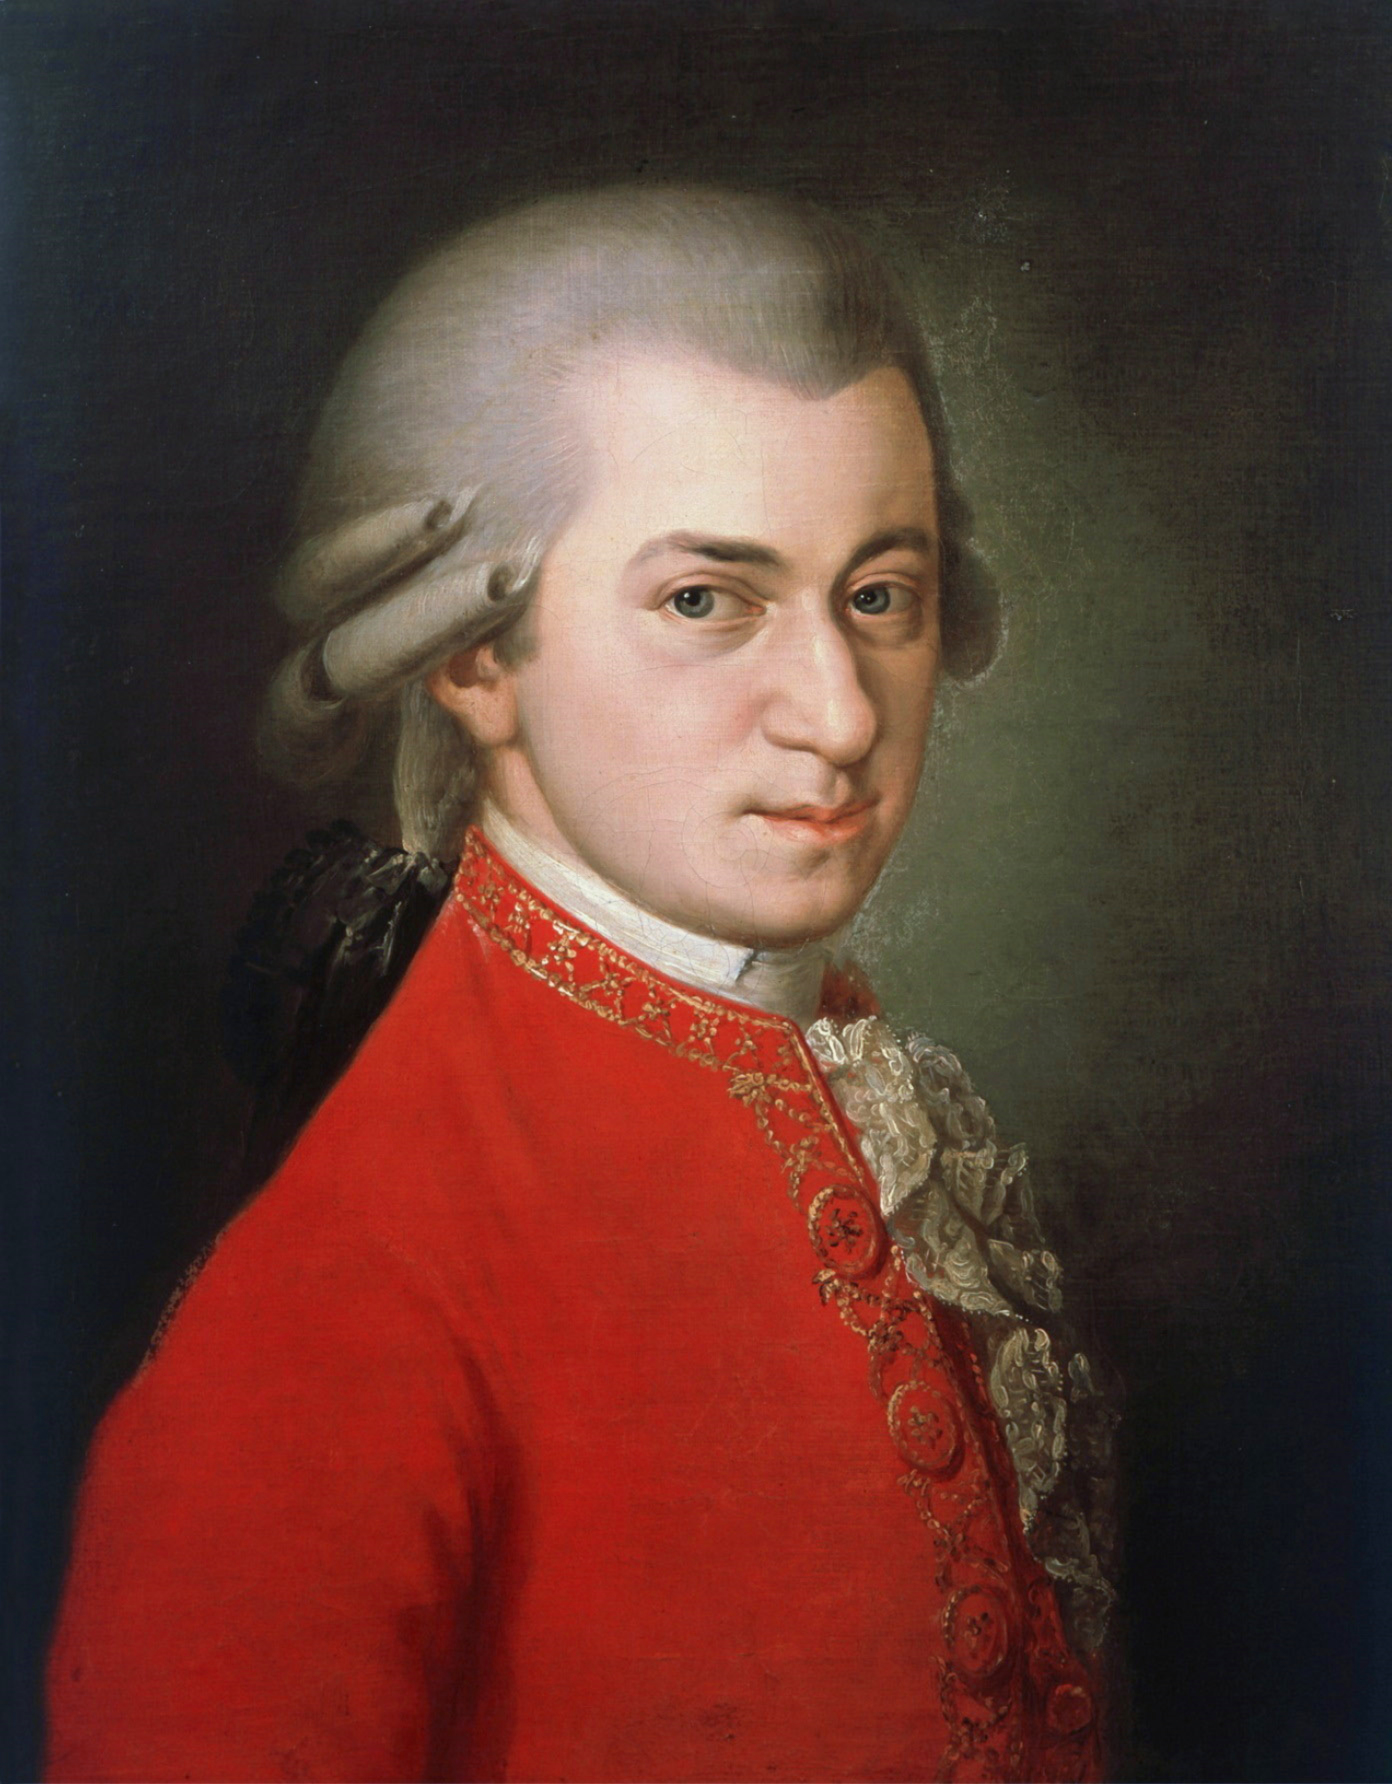 Requiem de Mozart, Motets de Haydn